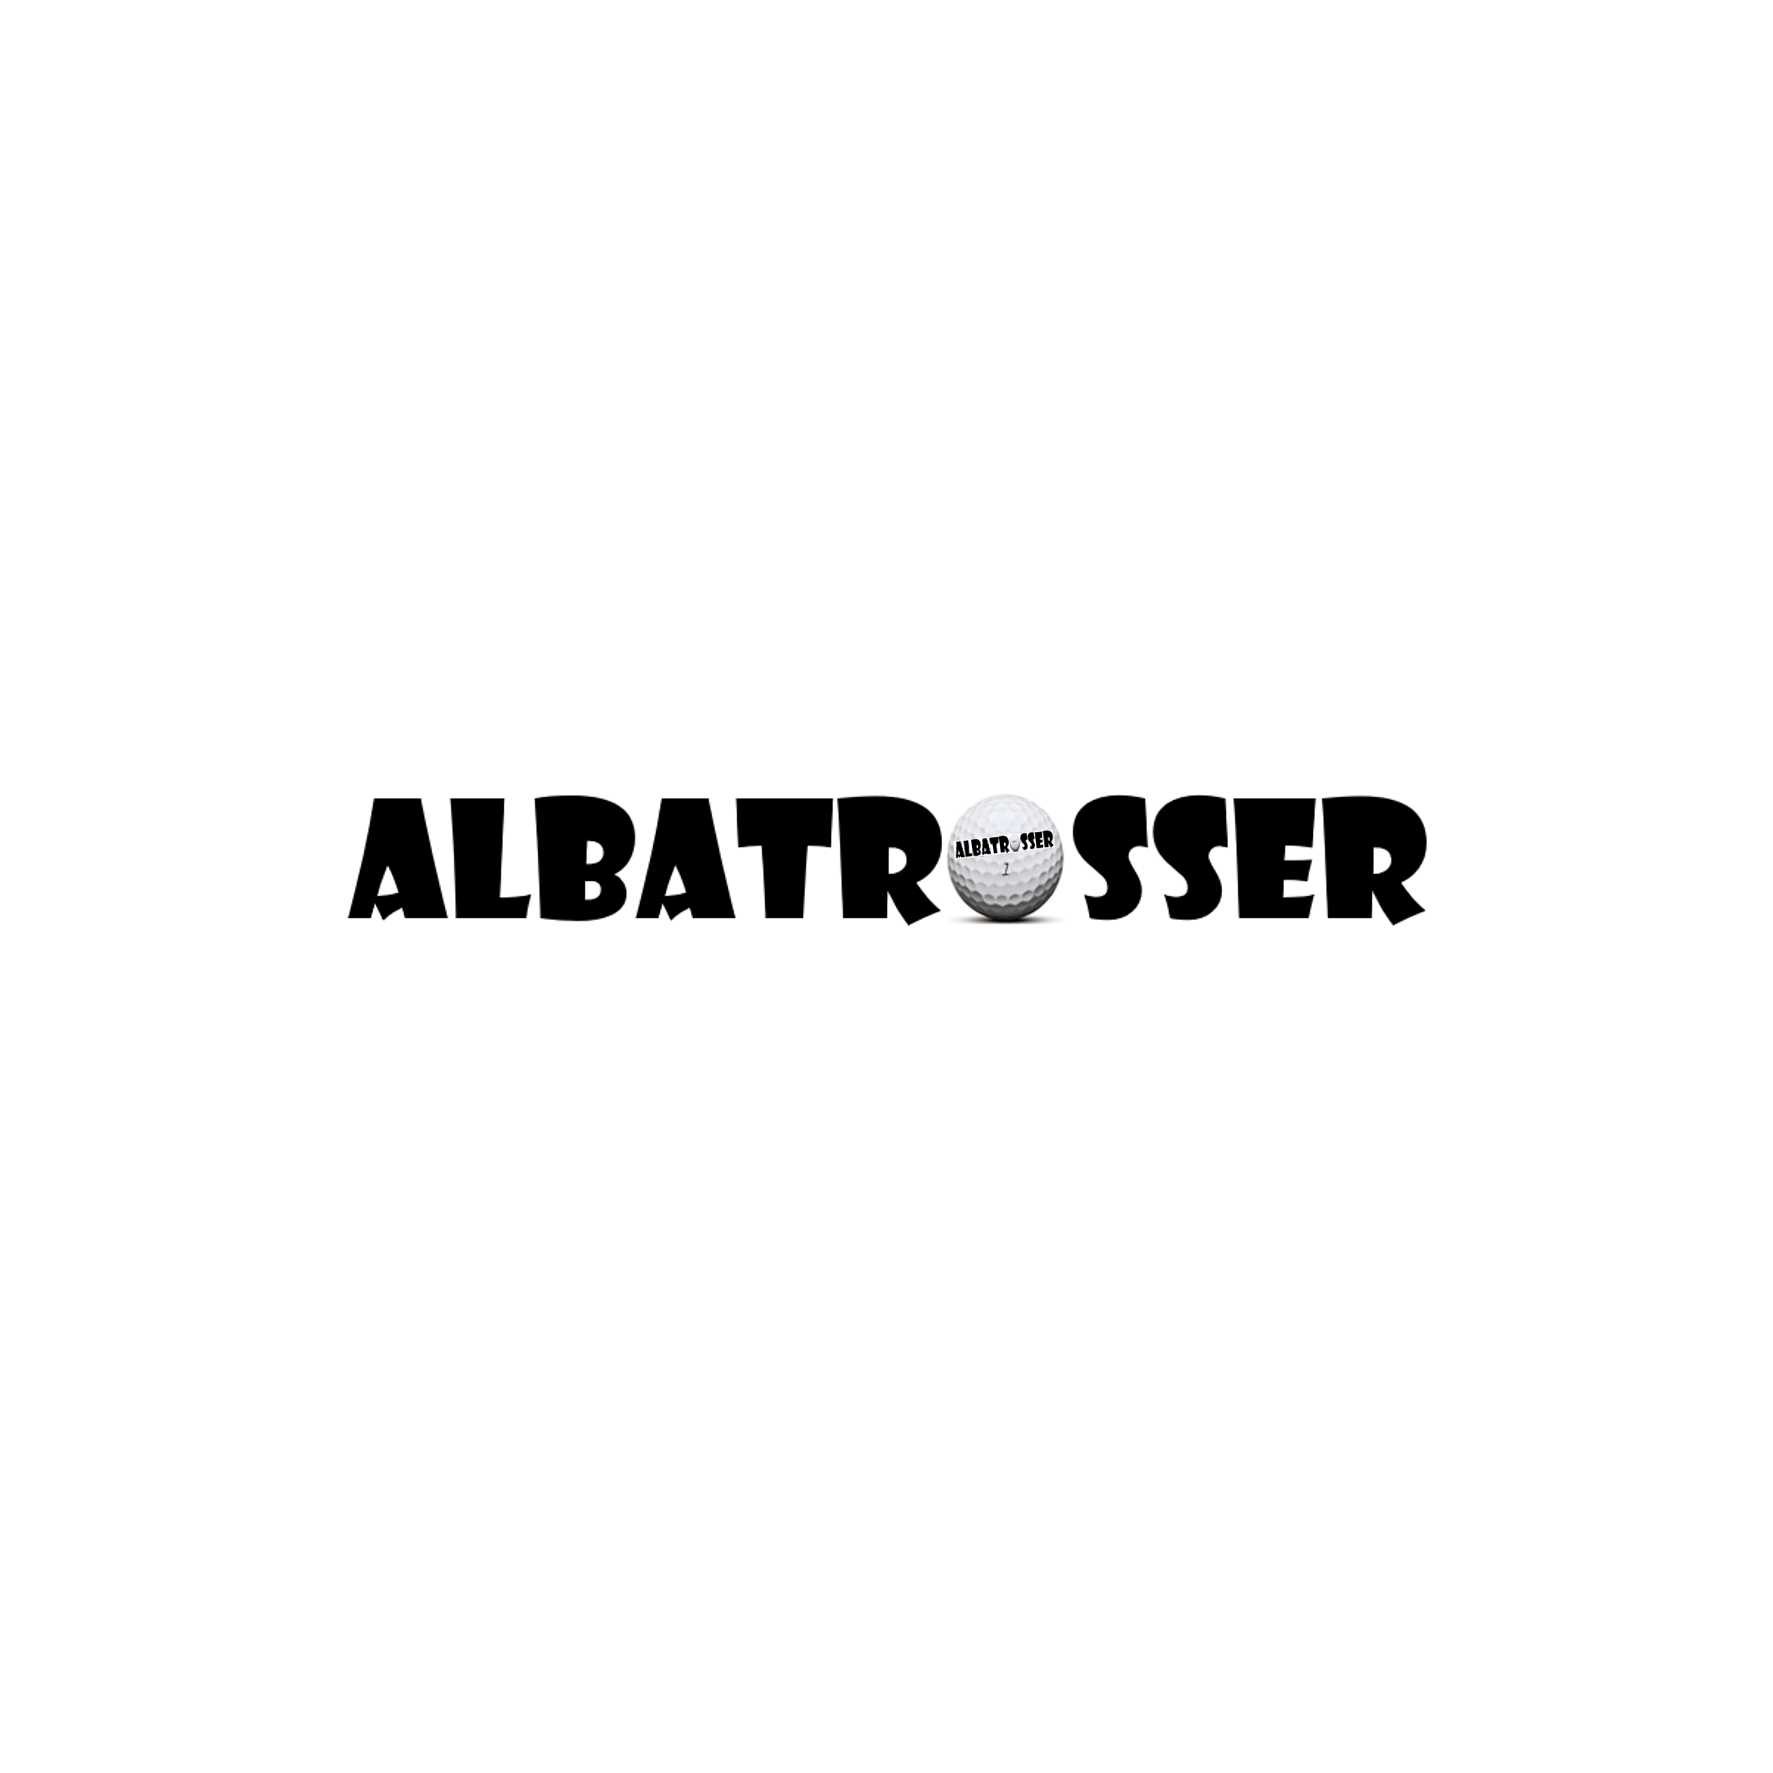 Albatrosser Episode 002 CIMB